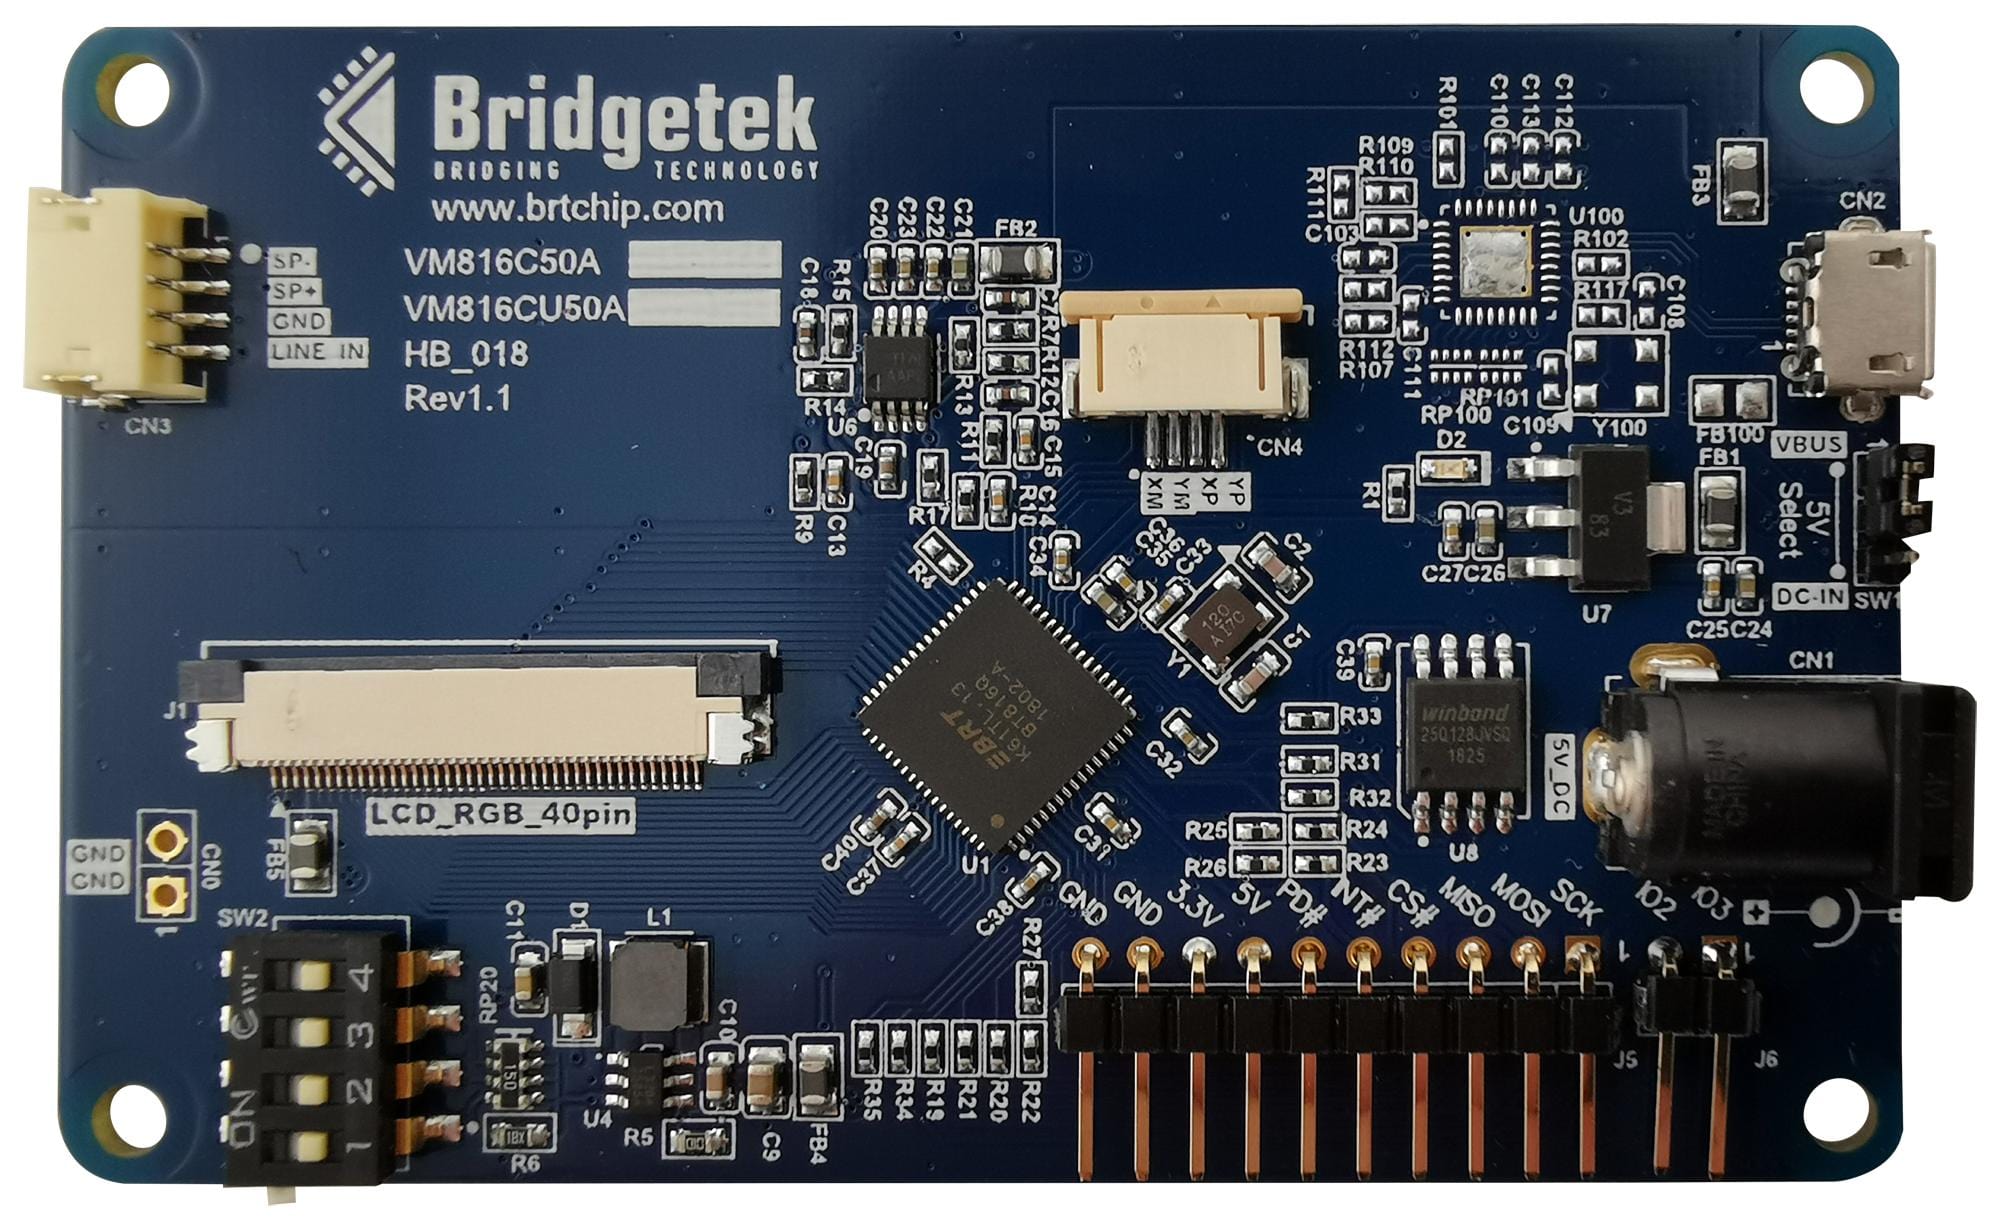 BRIDGETEK Audio / Video VM816CU50A-D CREDIT CARD BOARD, EMBEDDED VIDEO ENGINE BRIDGETEK 2931600 VM816CU50A-D